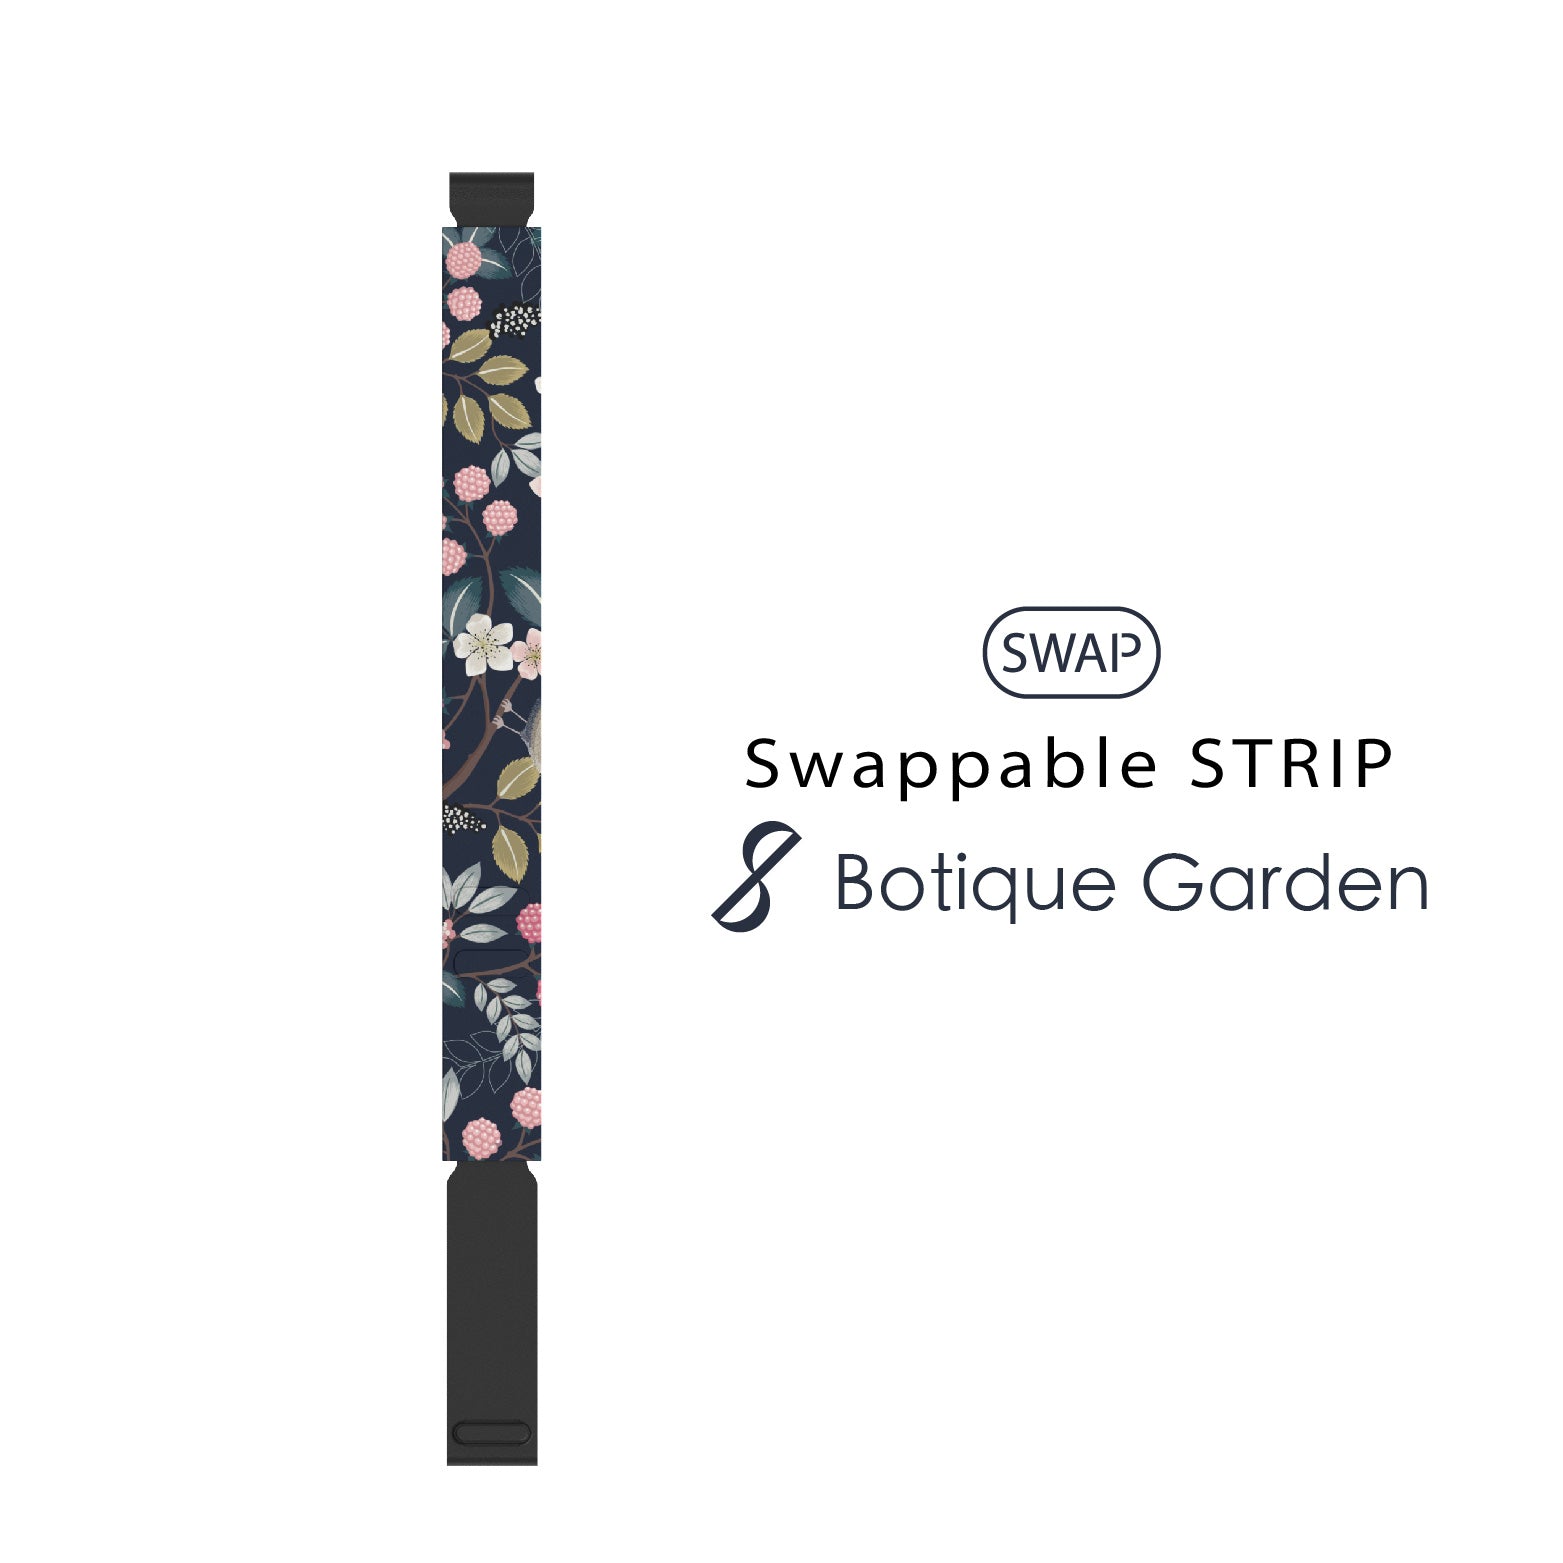 Swappable Strip: Boutique Garden